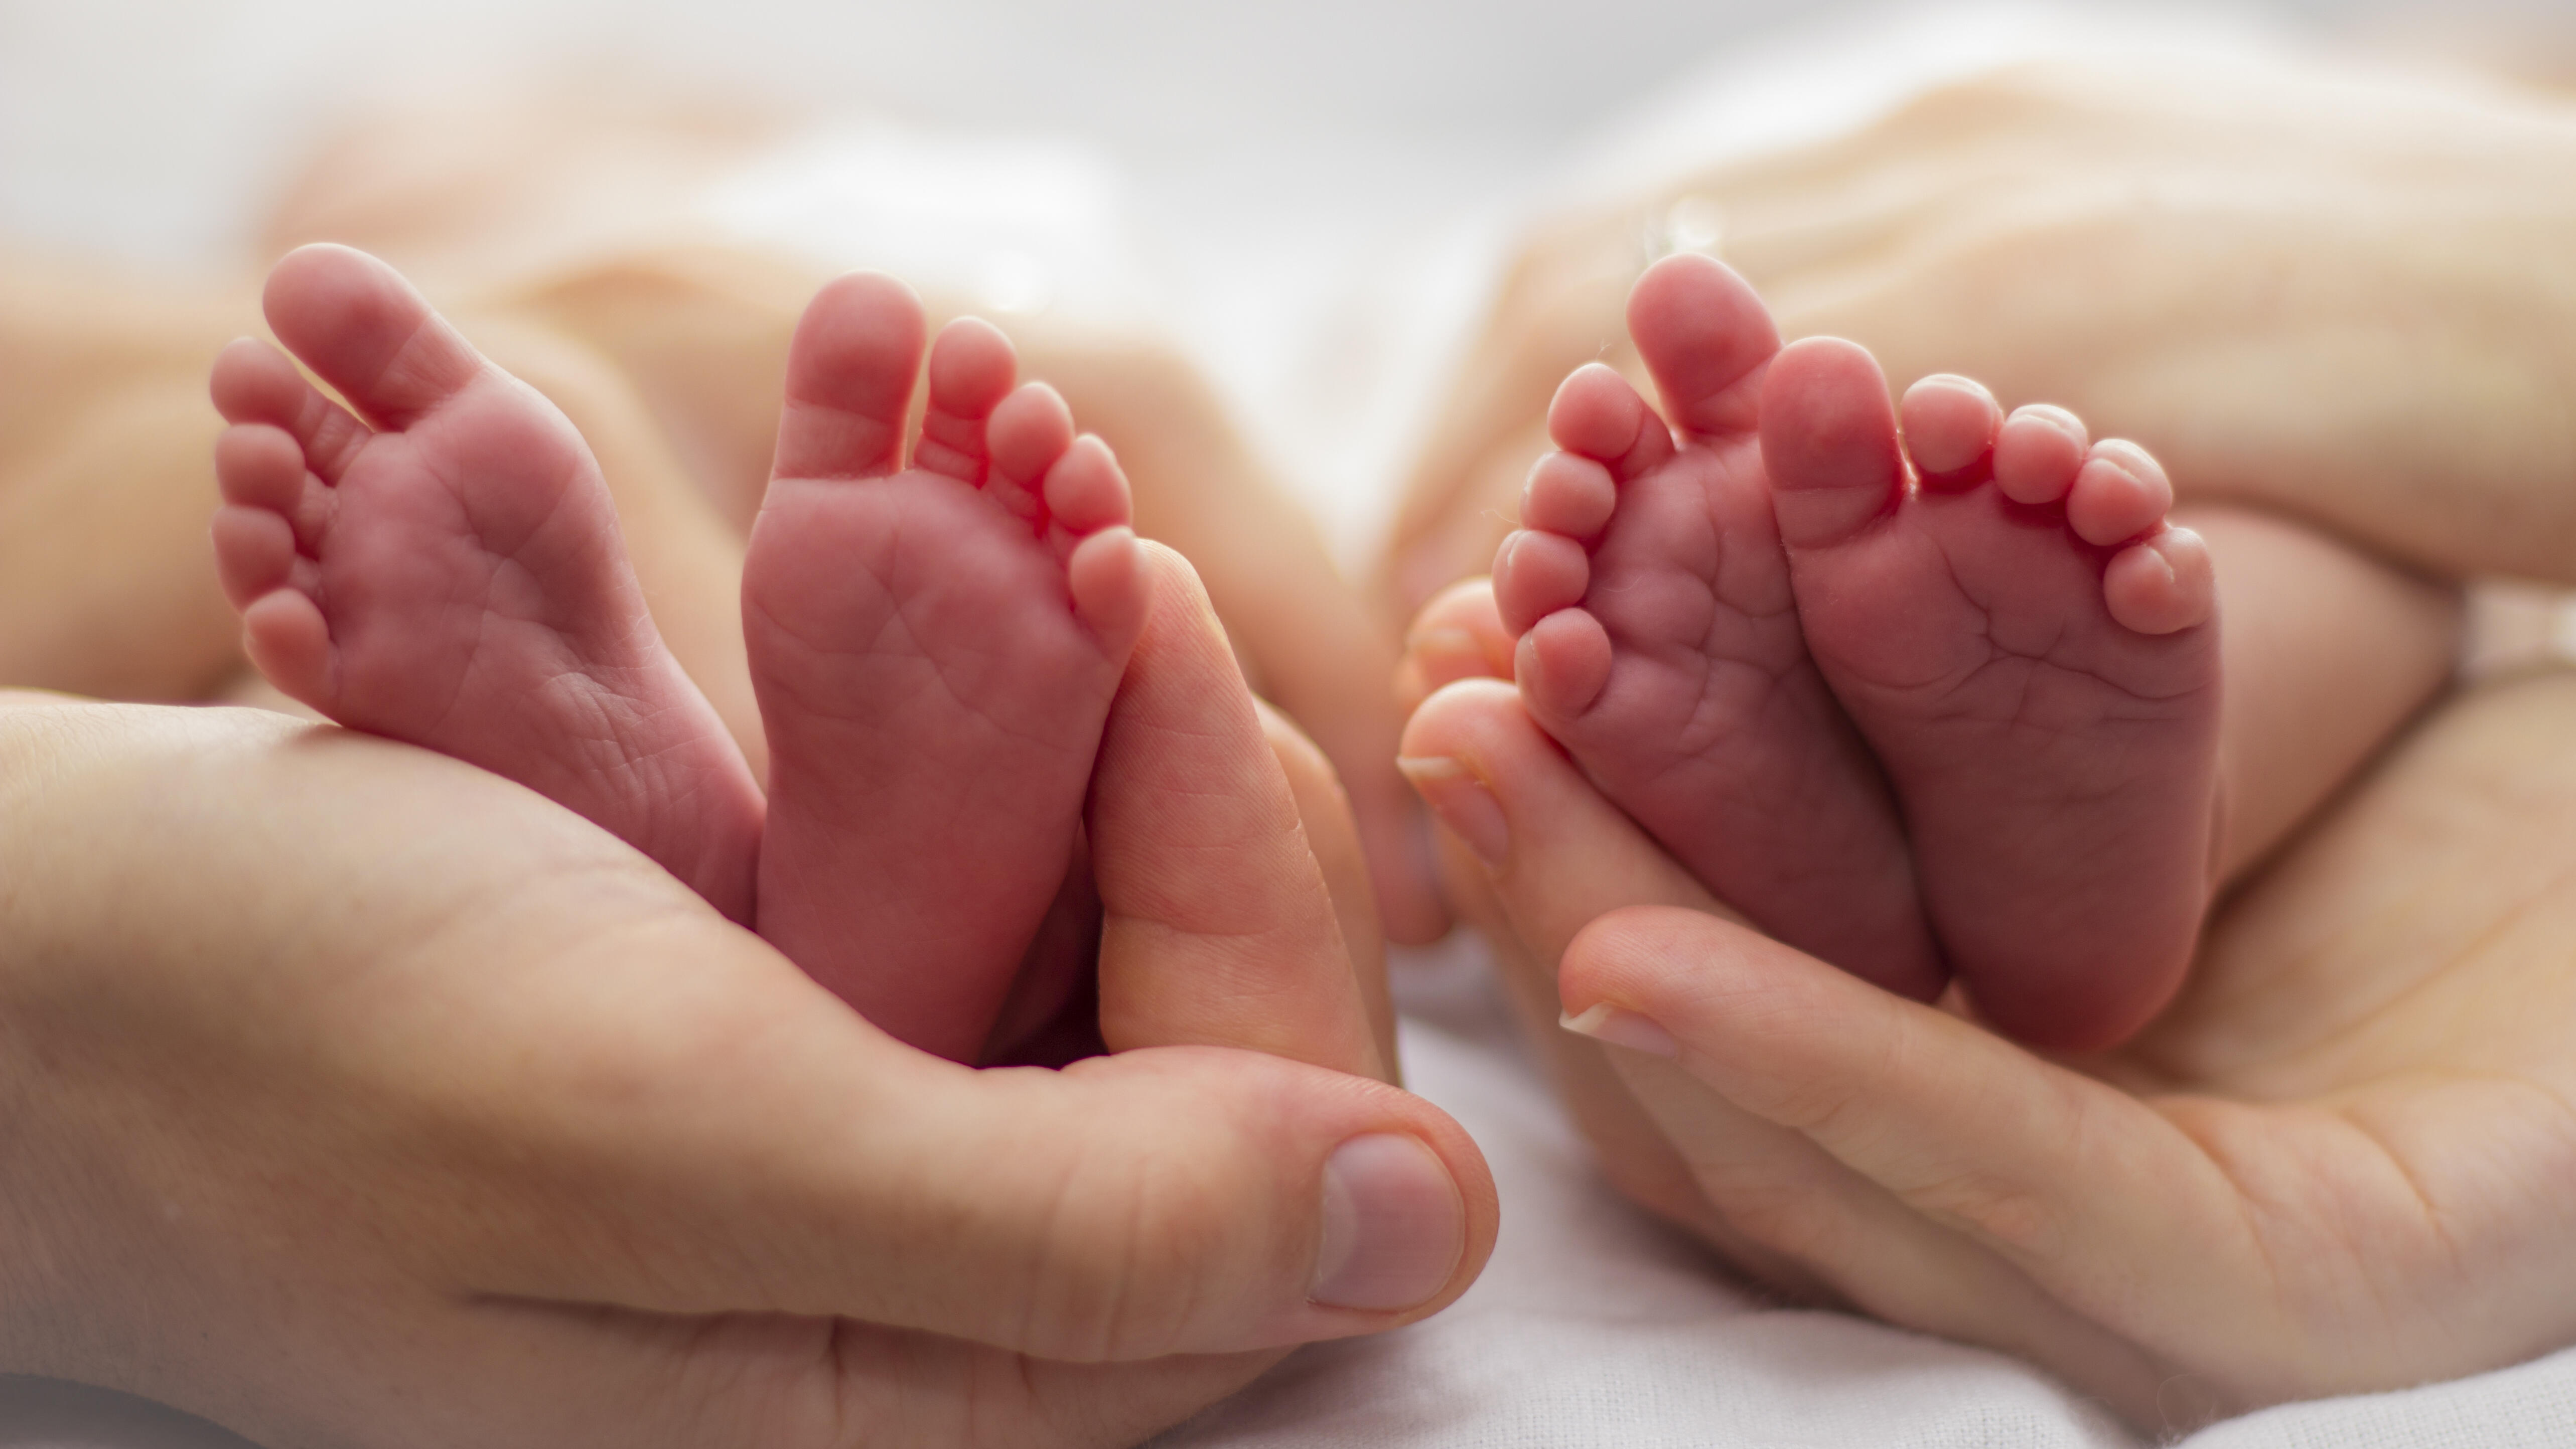 Мама 4 ноги. Ножки младенца. Ножки новорожденных близнецов. Ножки двойняшек новорожденных. С рождением двойняшек.